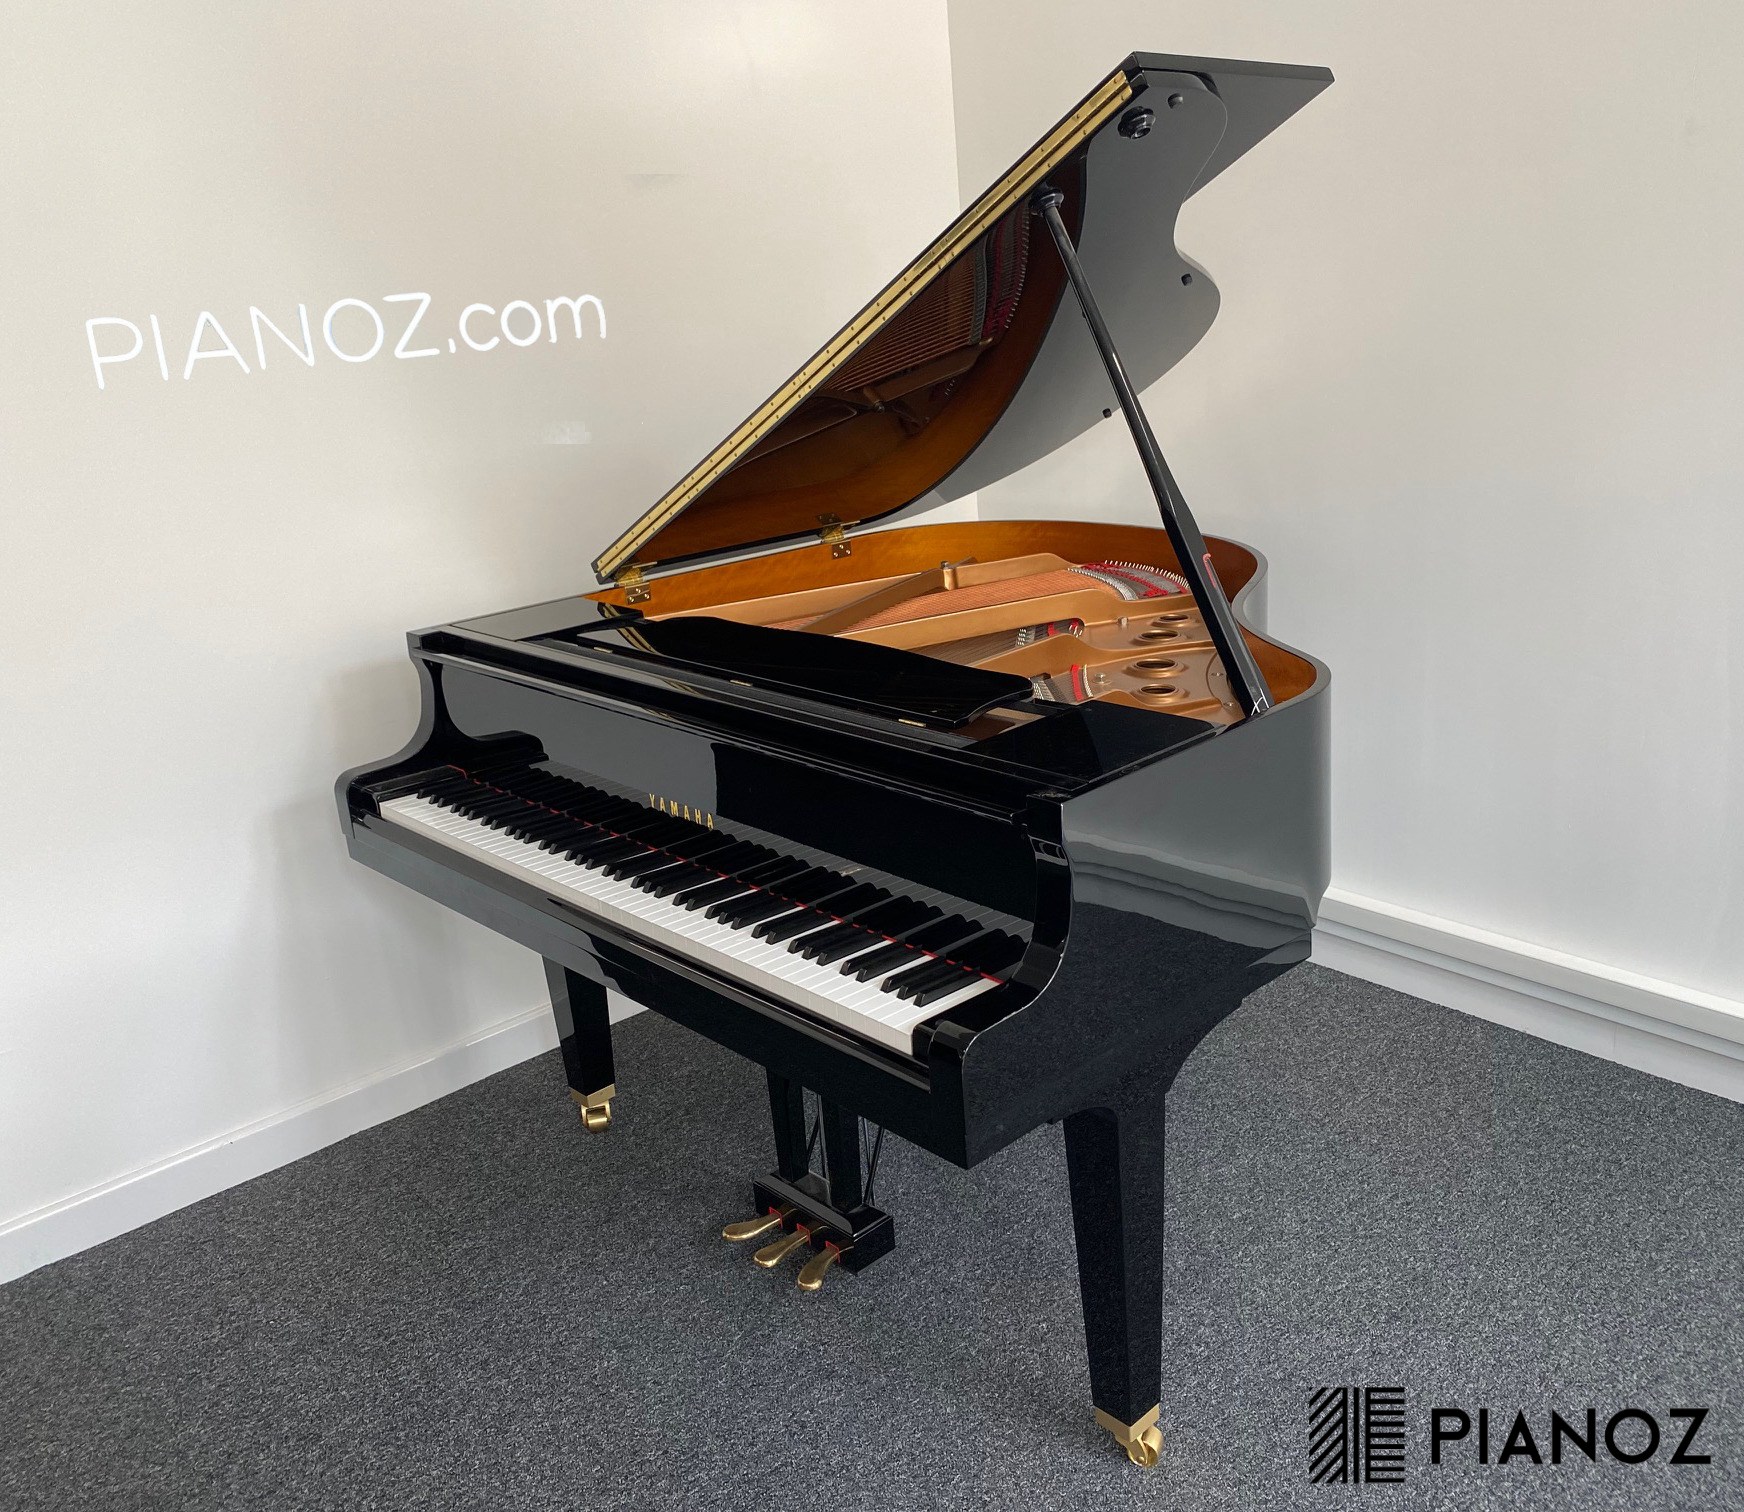 Yamaha GB1K E3 Disklavier  Baby Grand Piano piano for sale in UK